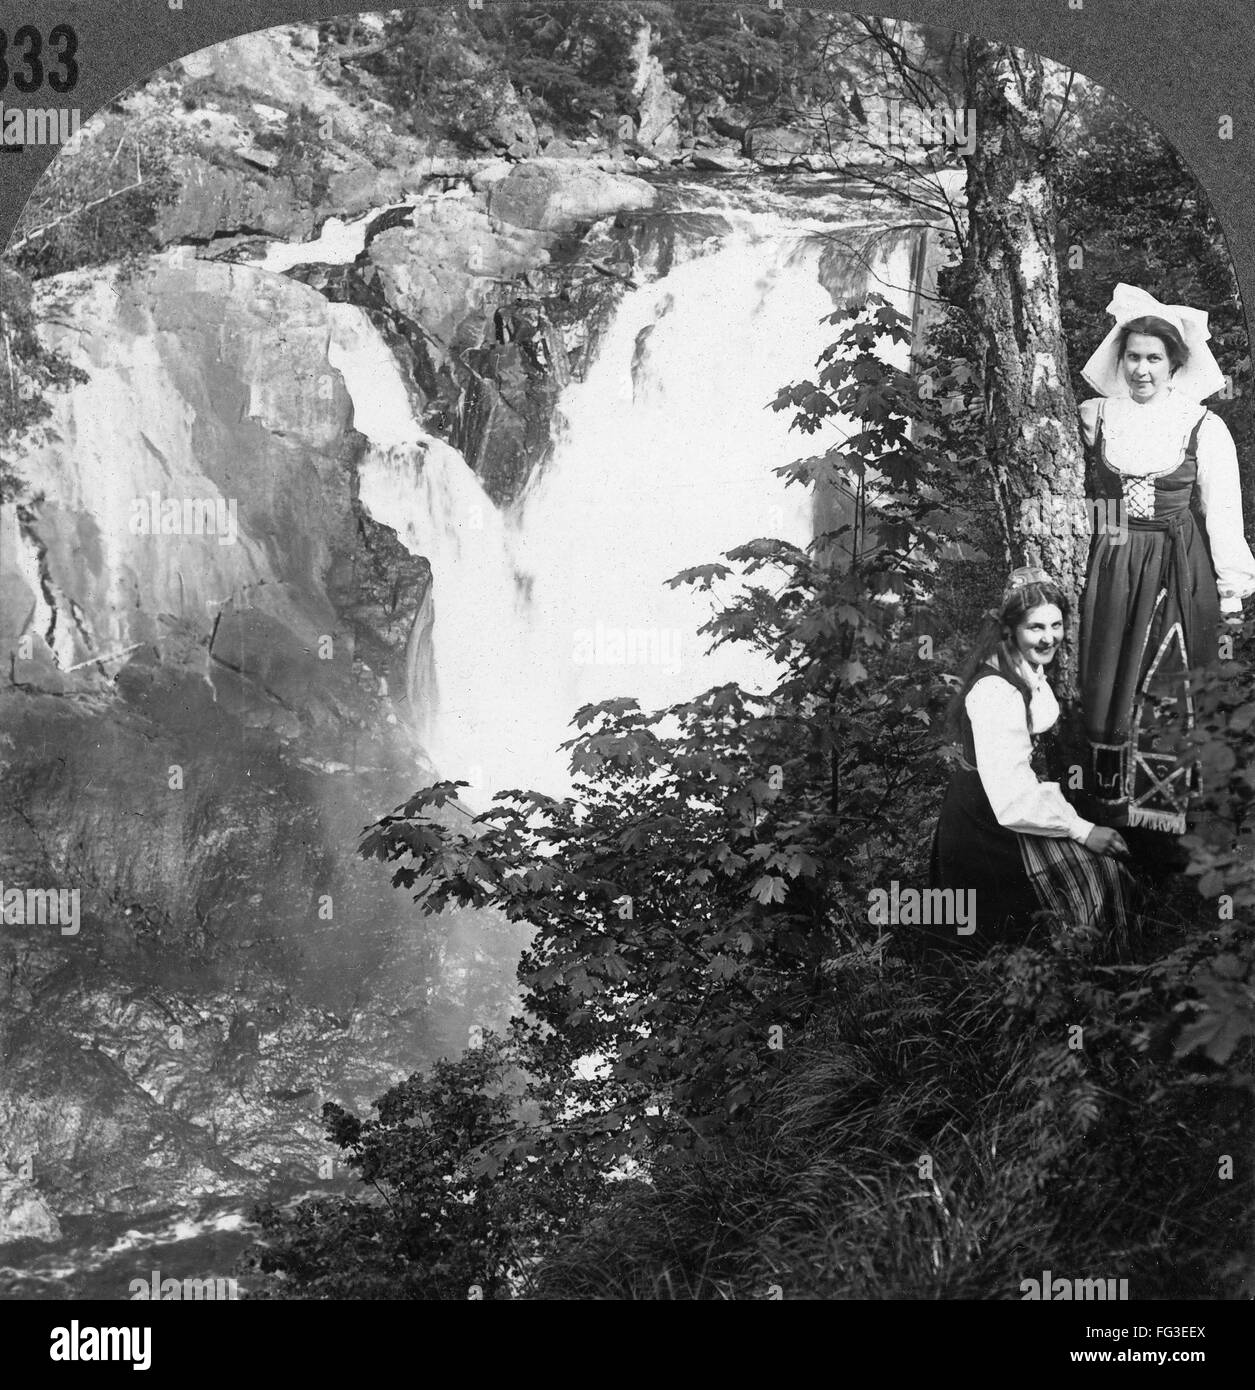 SWEDEN: HUSKVARNA FALLS. /nTwo women posed before the Huskvana Falls near Jonkoping, Sweden. Stereograph, c1900. Stock Photo